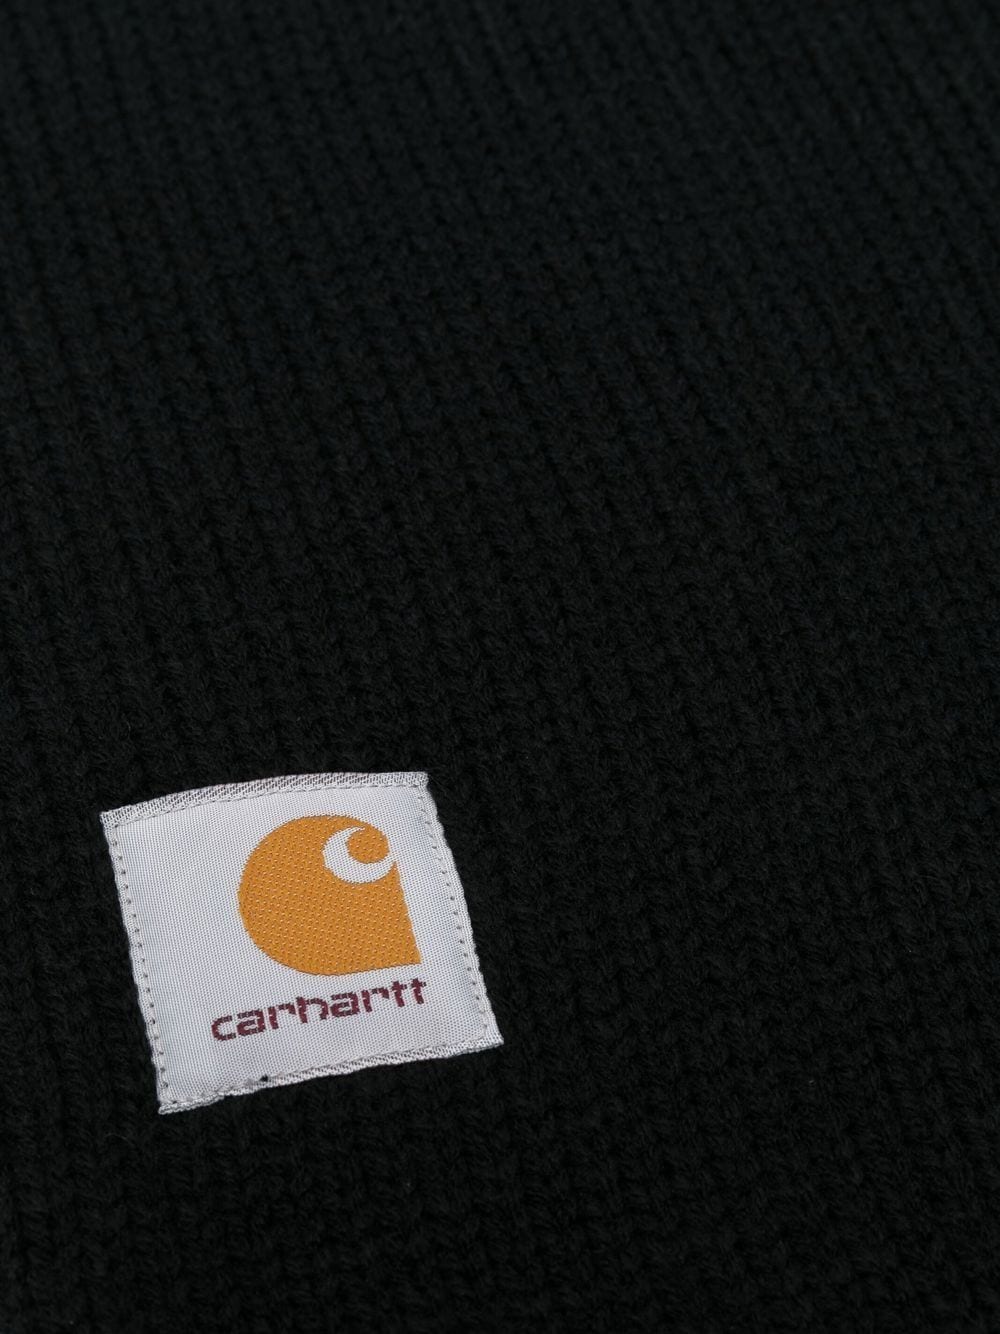 CARHARTT WIP MAIN Hats Black